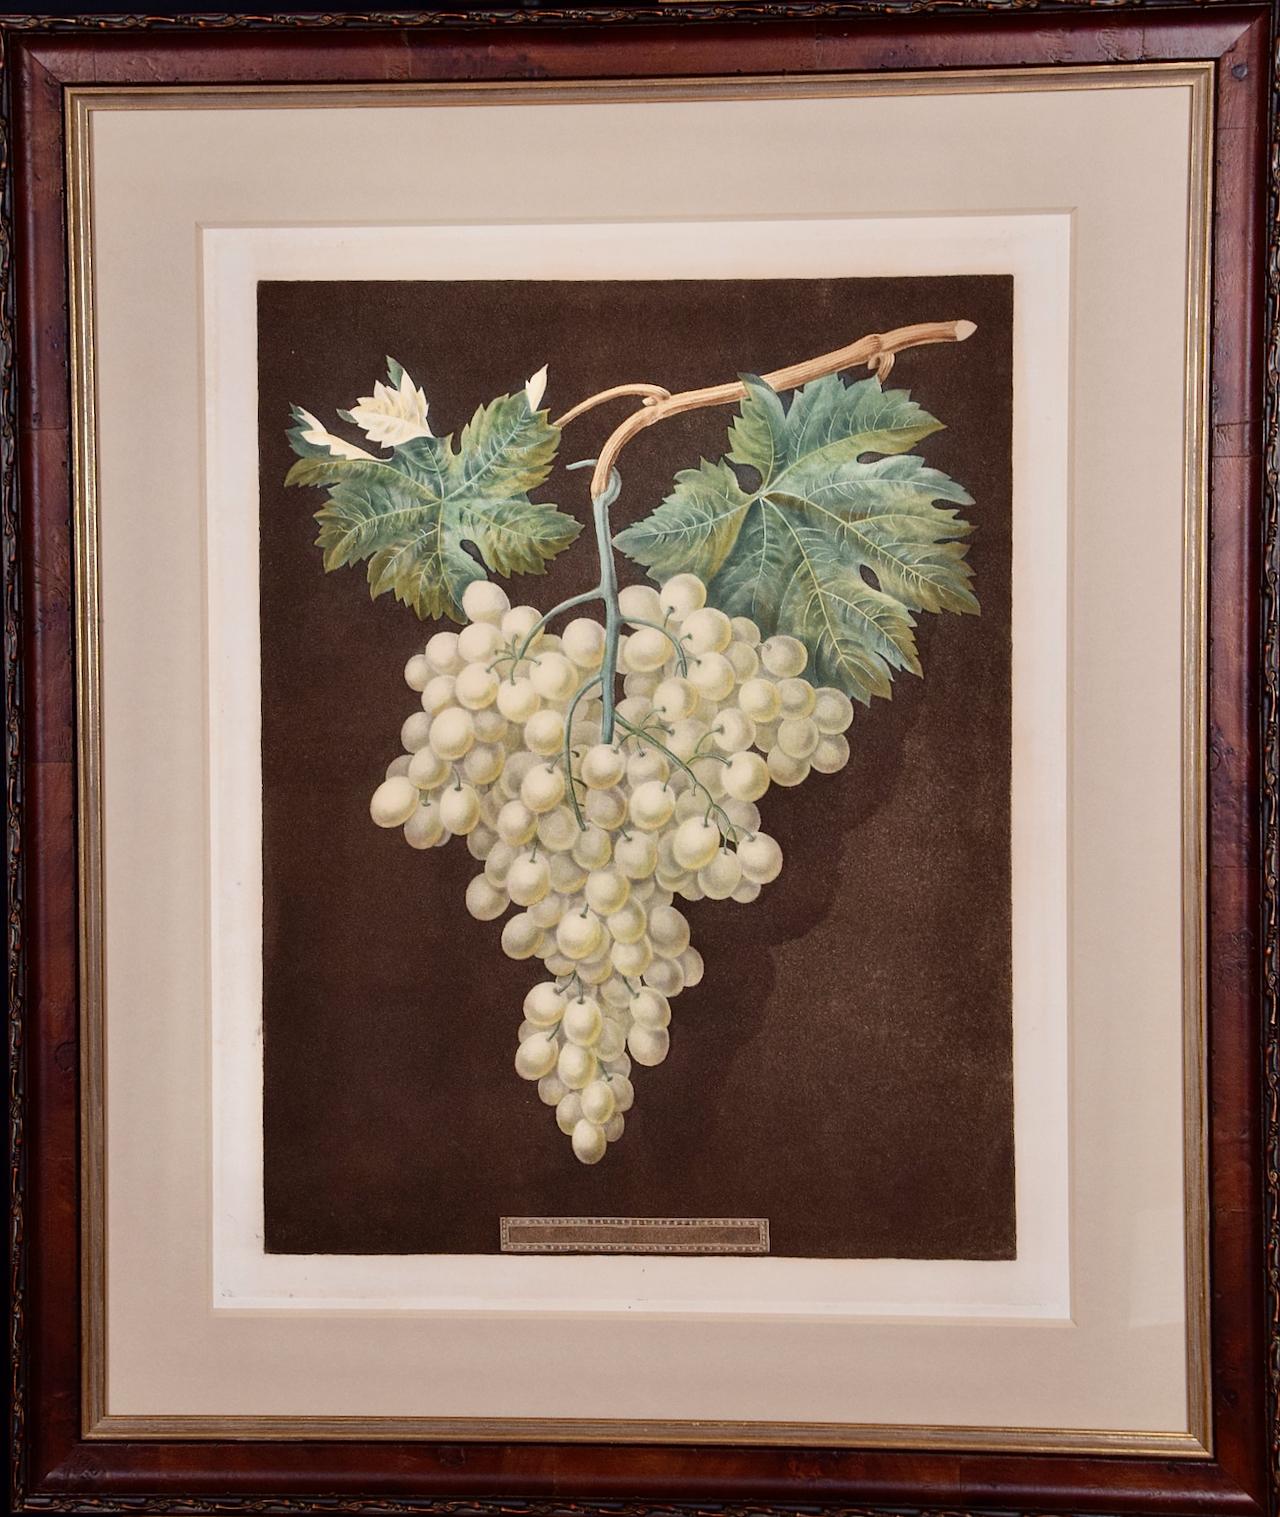 george brookshaw Print - White Hamburgh Grape: A Framed 19th C. Color Engraving by George Brookshaw